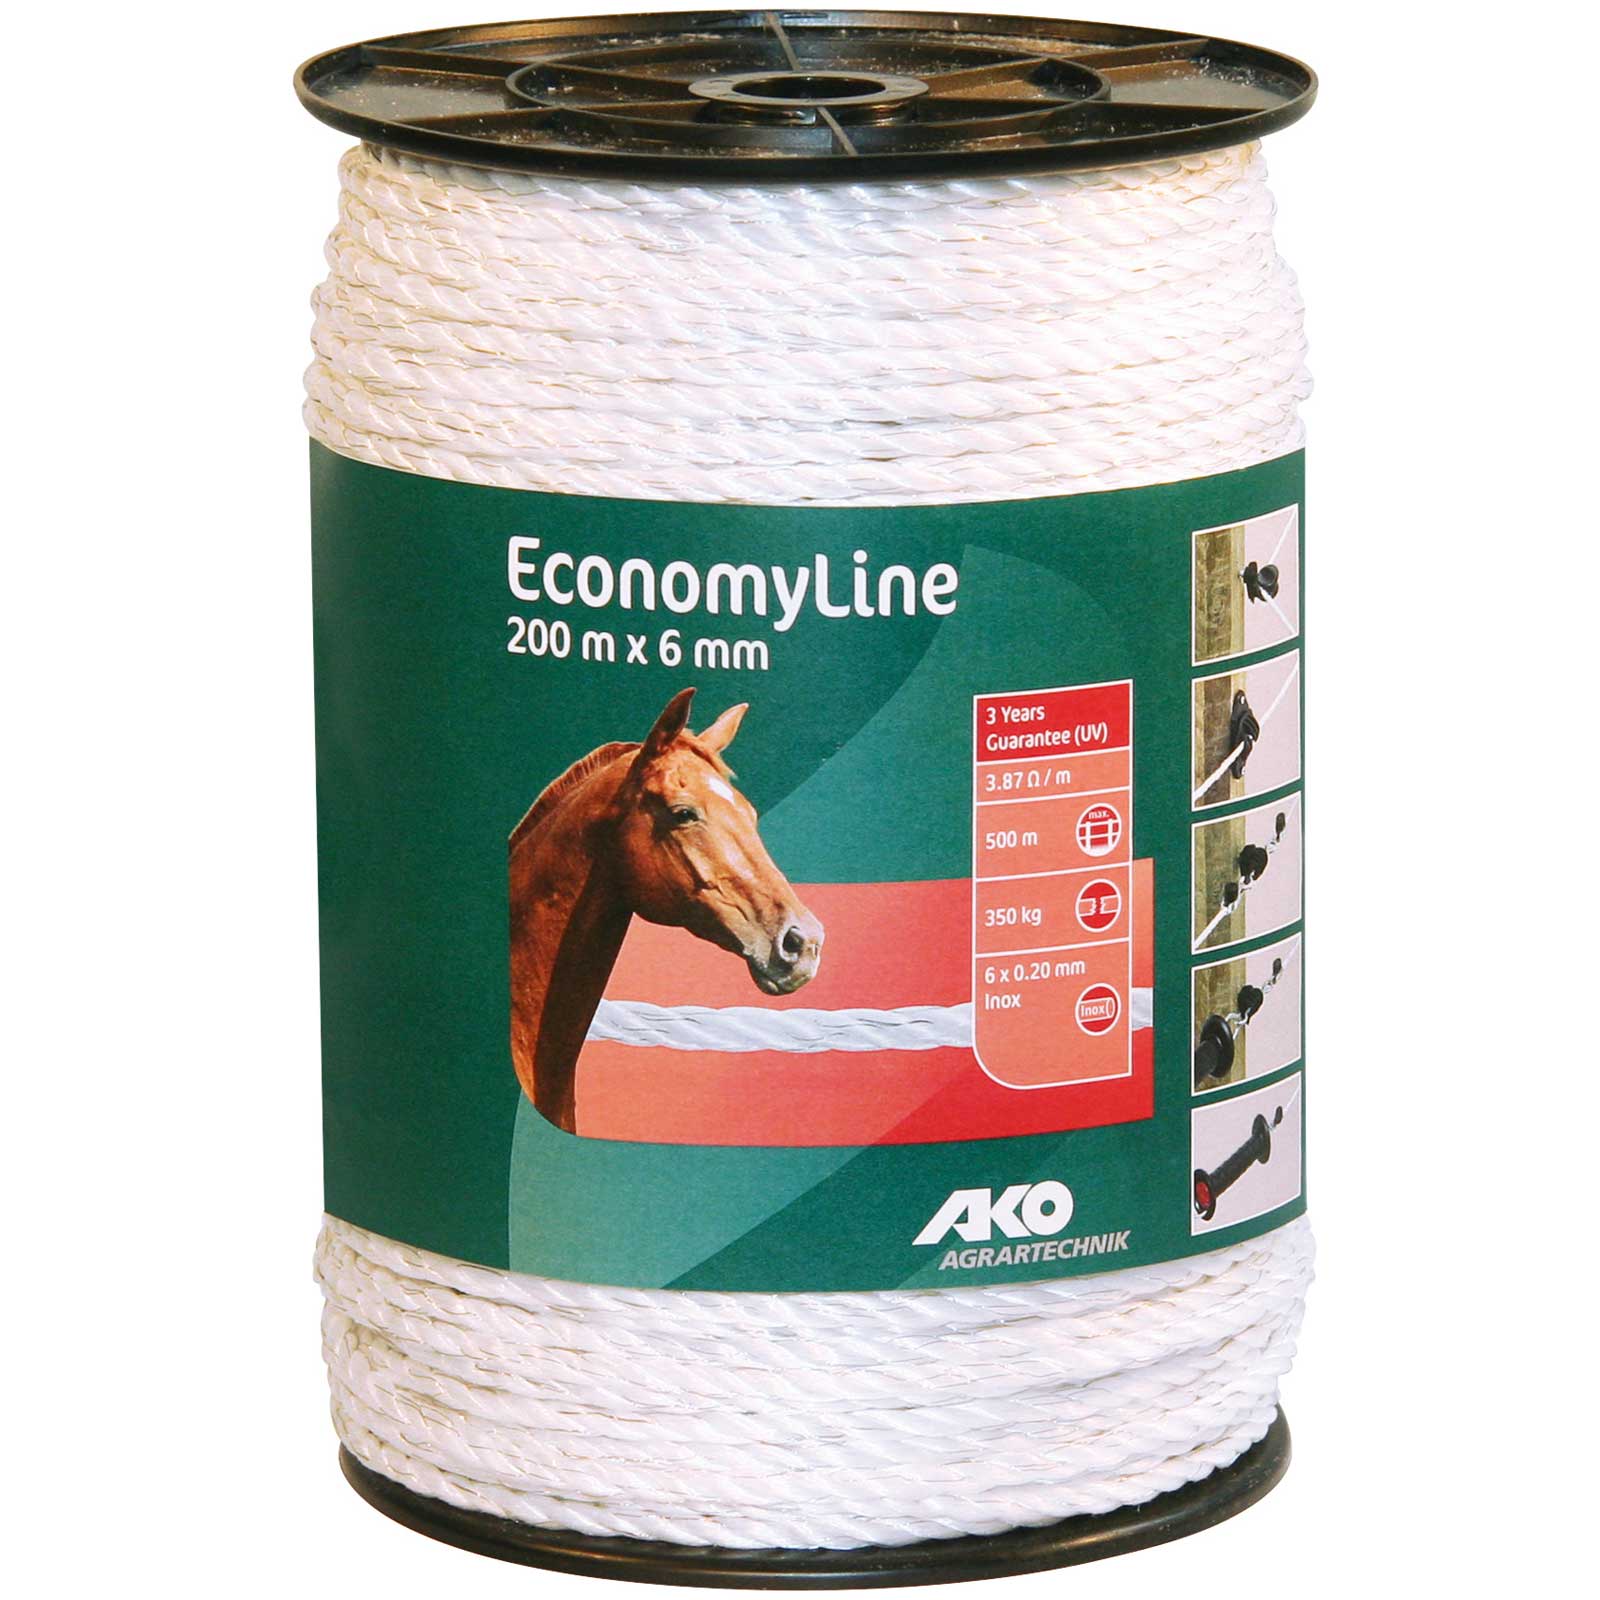 Ako Pasture Fence Rope EconomyLine 200m, Ø 6mm, 6x0.20 Niro, white